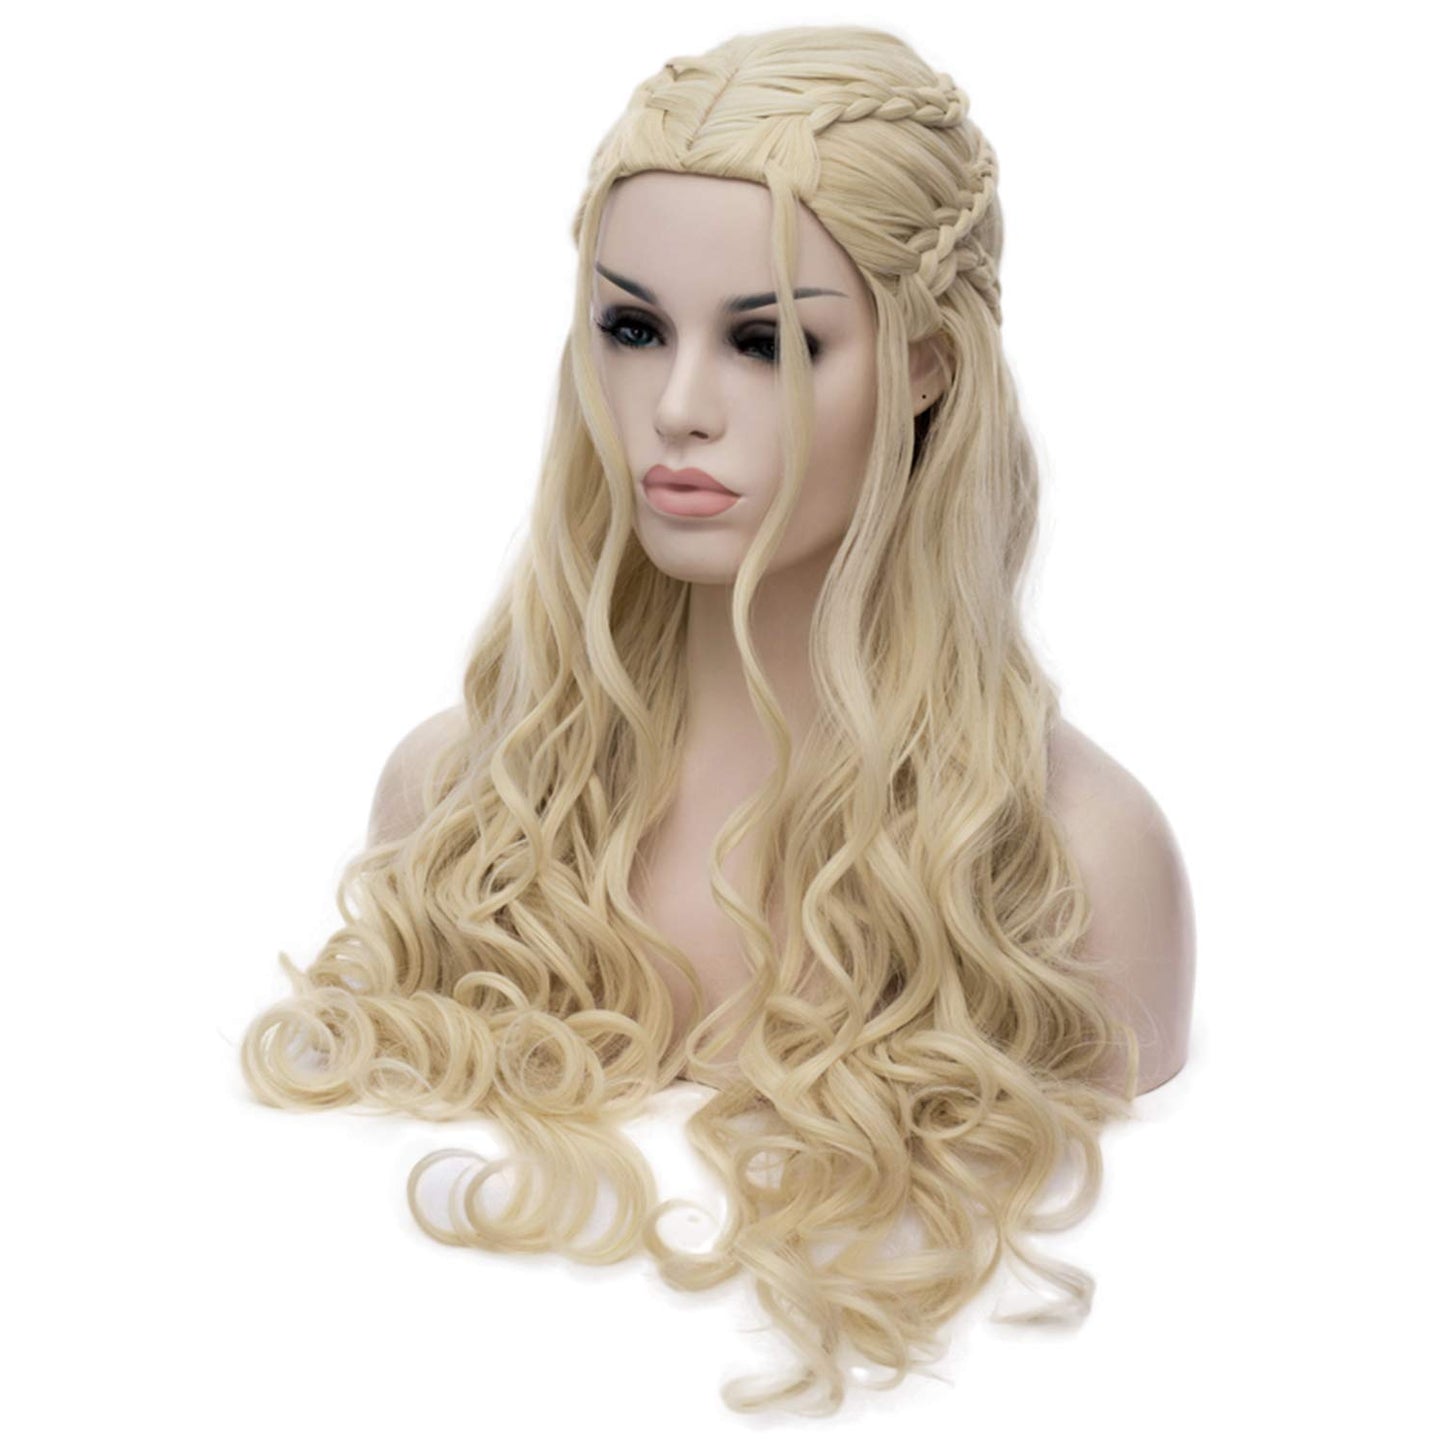 Bopocoko Game of Thrones Wigs Fluffy Cosplay Wig Daenerys Targaryen Long Curly Blonde Hair Wigs for Women Halloween A-BU121